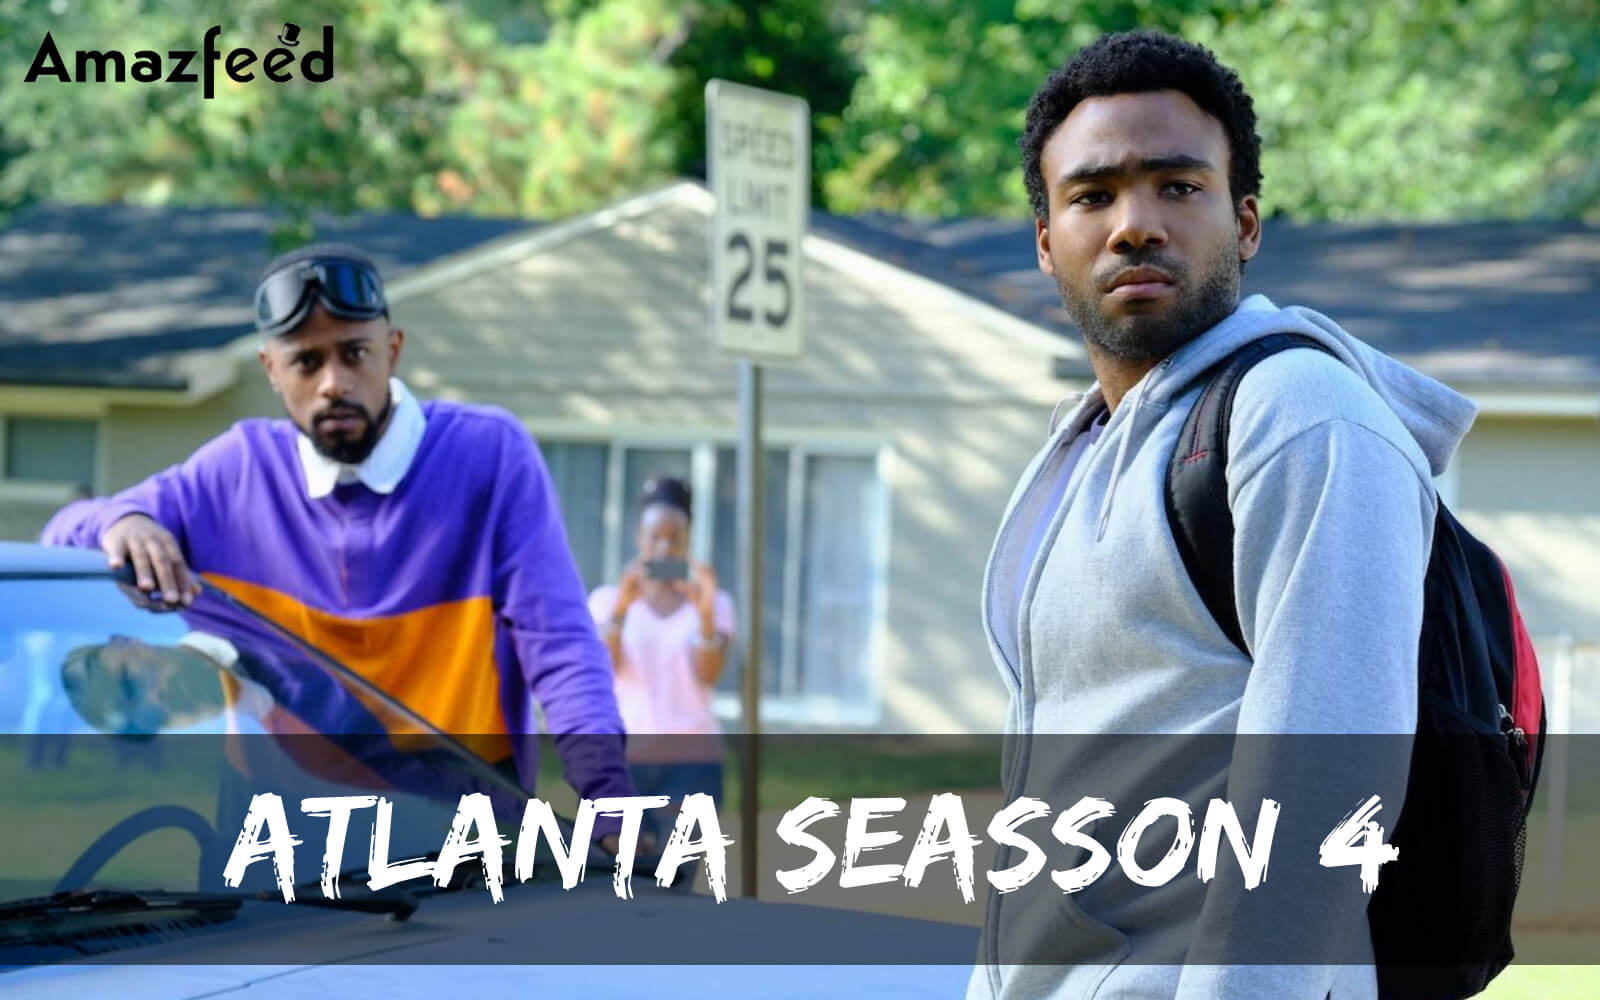 _Atlanta seasson 4 release date